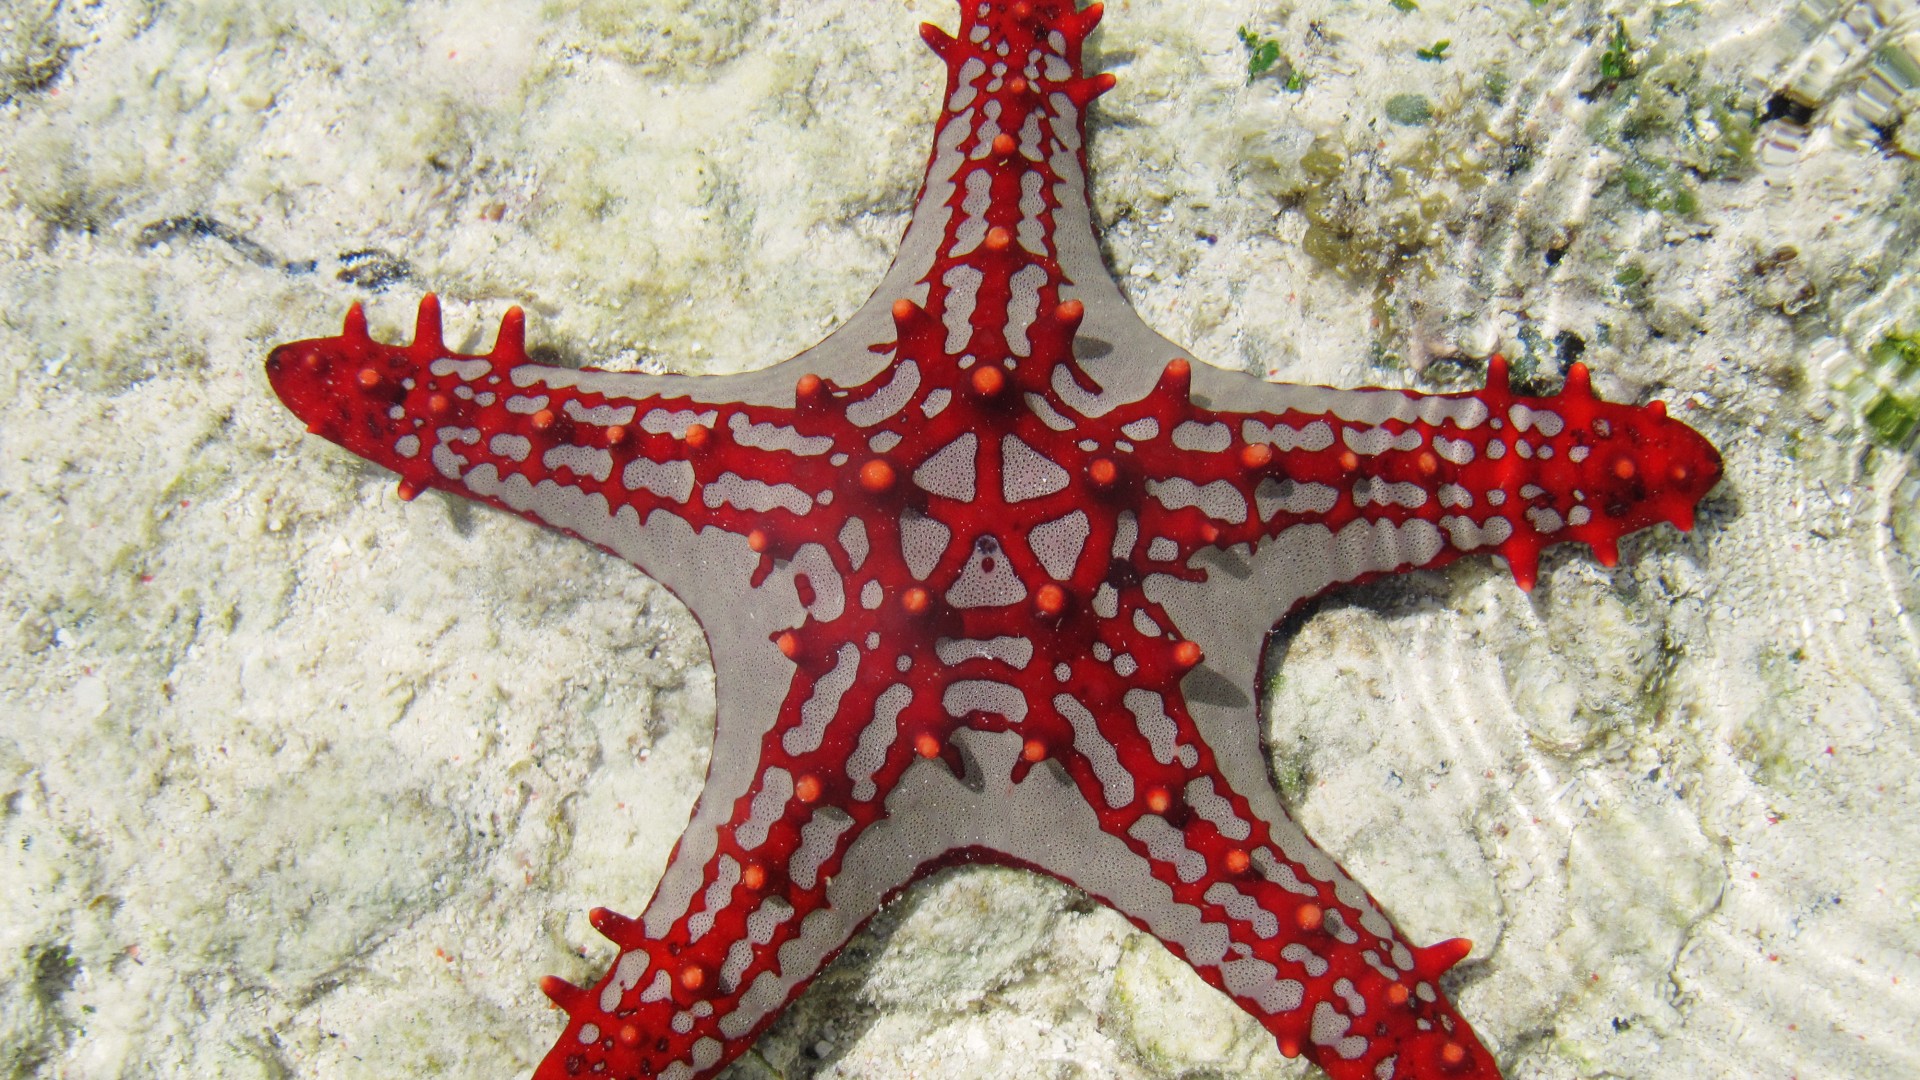 Sea Star, Zanzibar, Africa, diving, tourism, underwater, fish, star fish, sealife, World's best diving sites (horizontal)